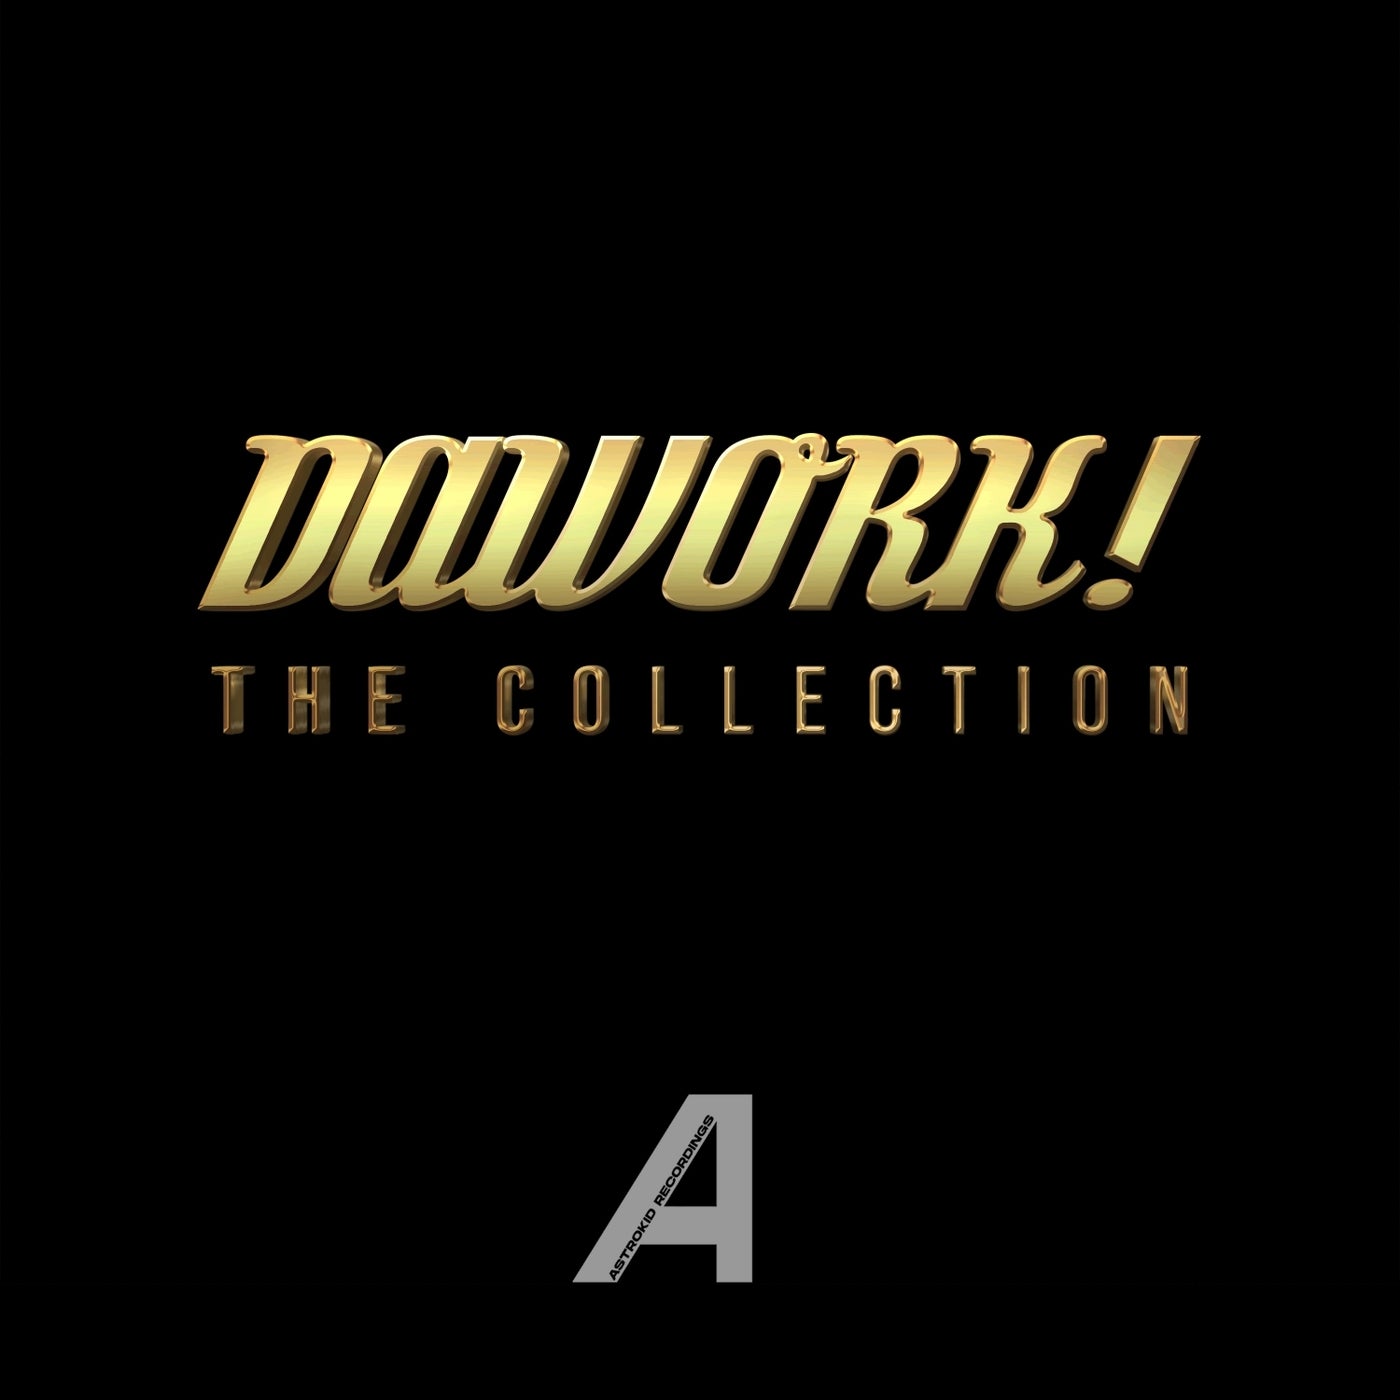 Dawork ! the Collection (Original mix)